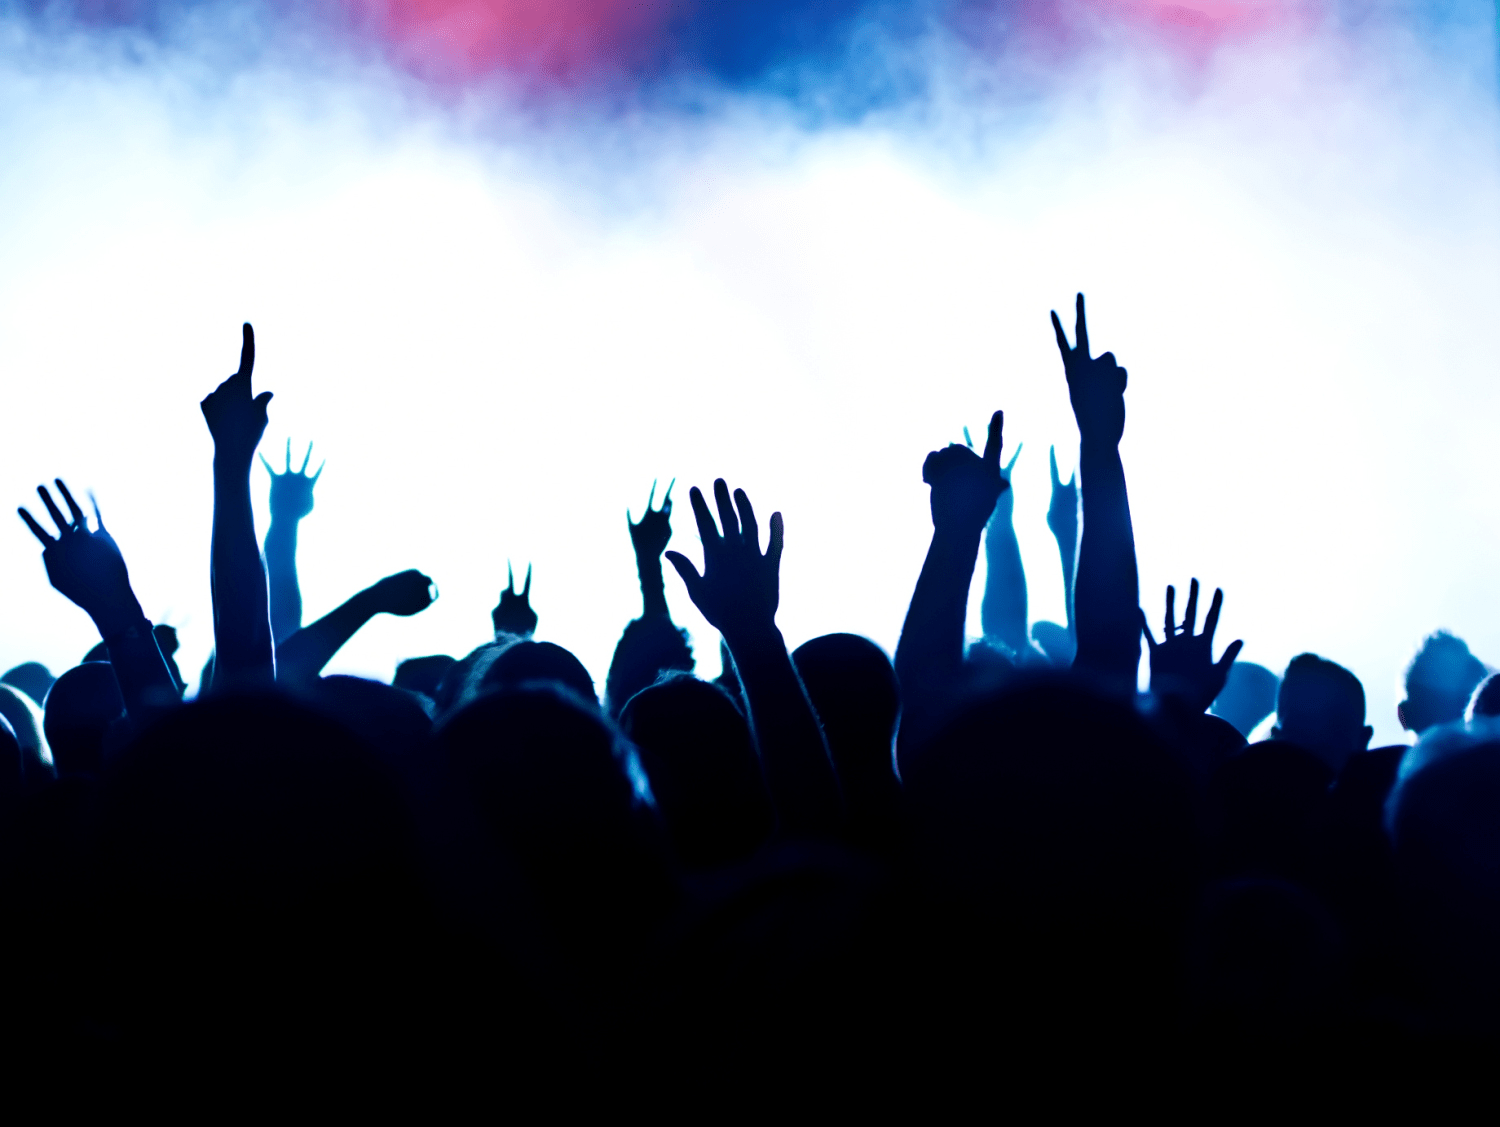 Много людей на концерте. Толпа на концерте. Рок концерт толпа. Поднятые руки на концерте. Толпа людей на концерте.